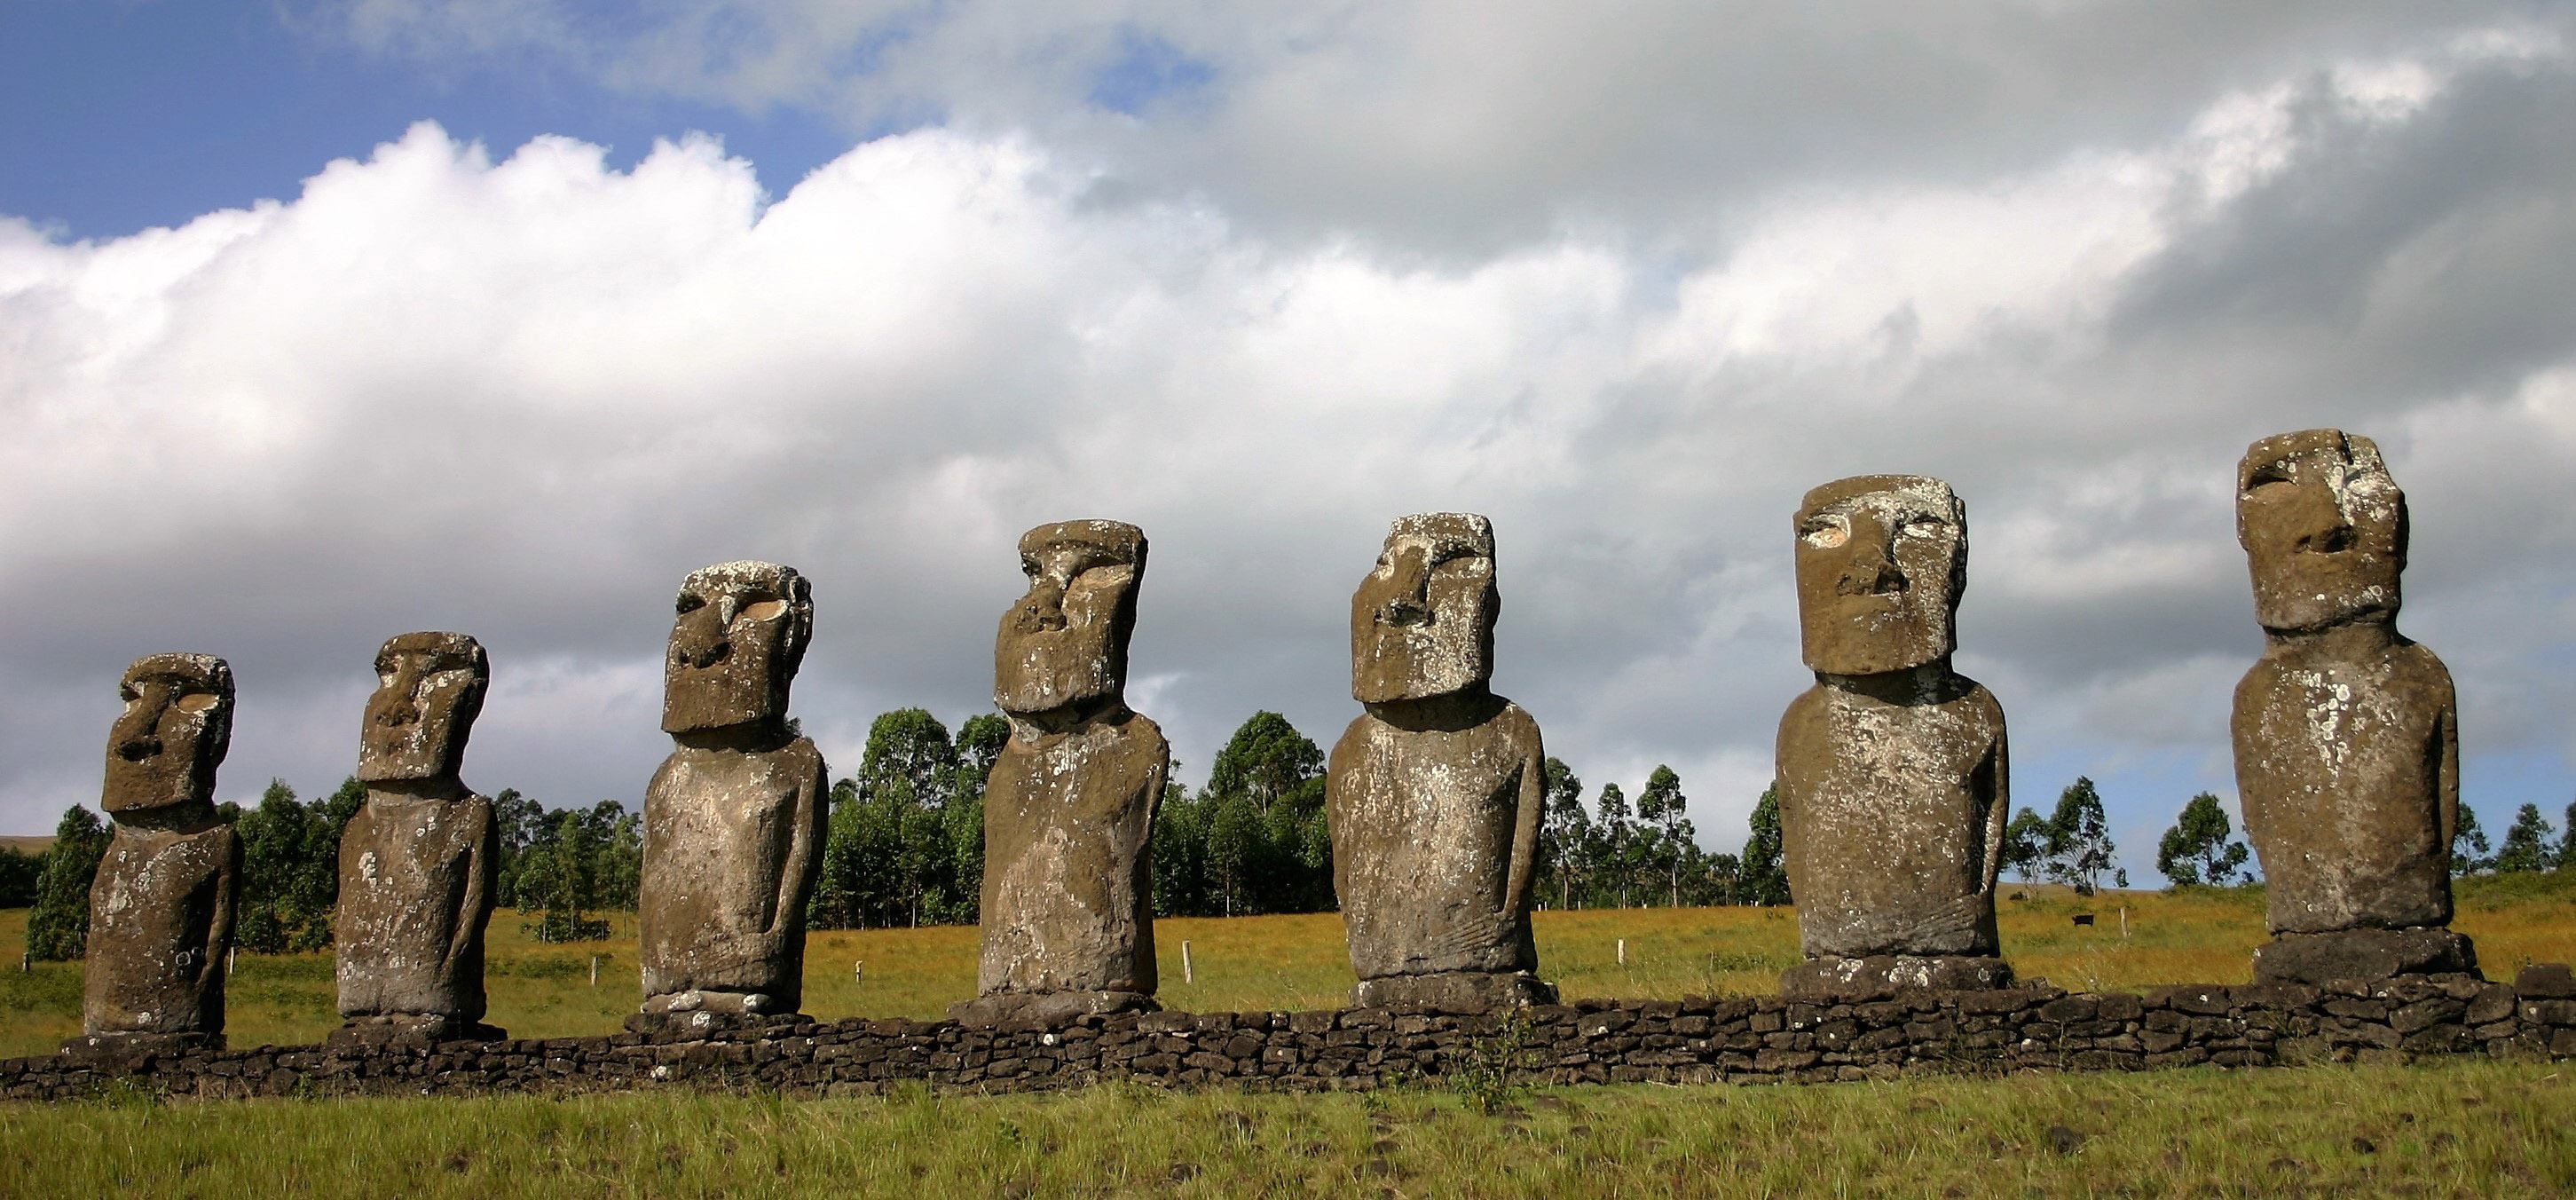 Easter Island, Moai statues in Chile, Public domain images, Captivating stone figures, 2910x1360 Dual Screen Desktop